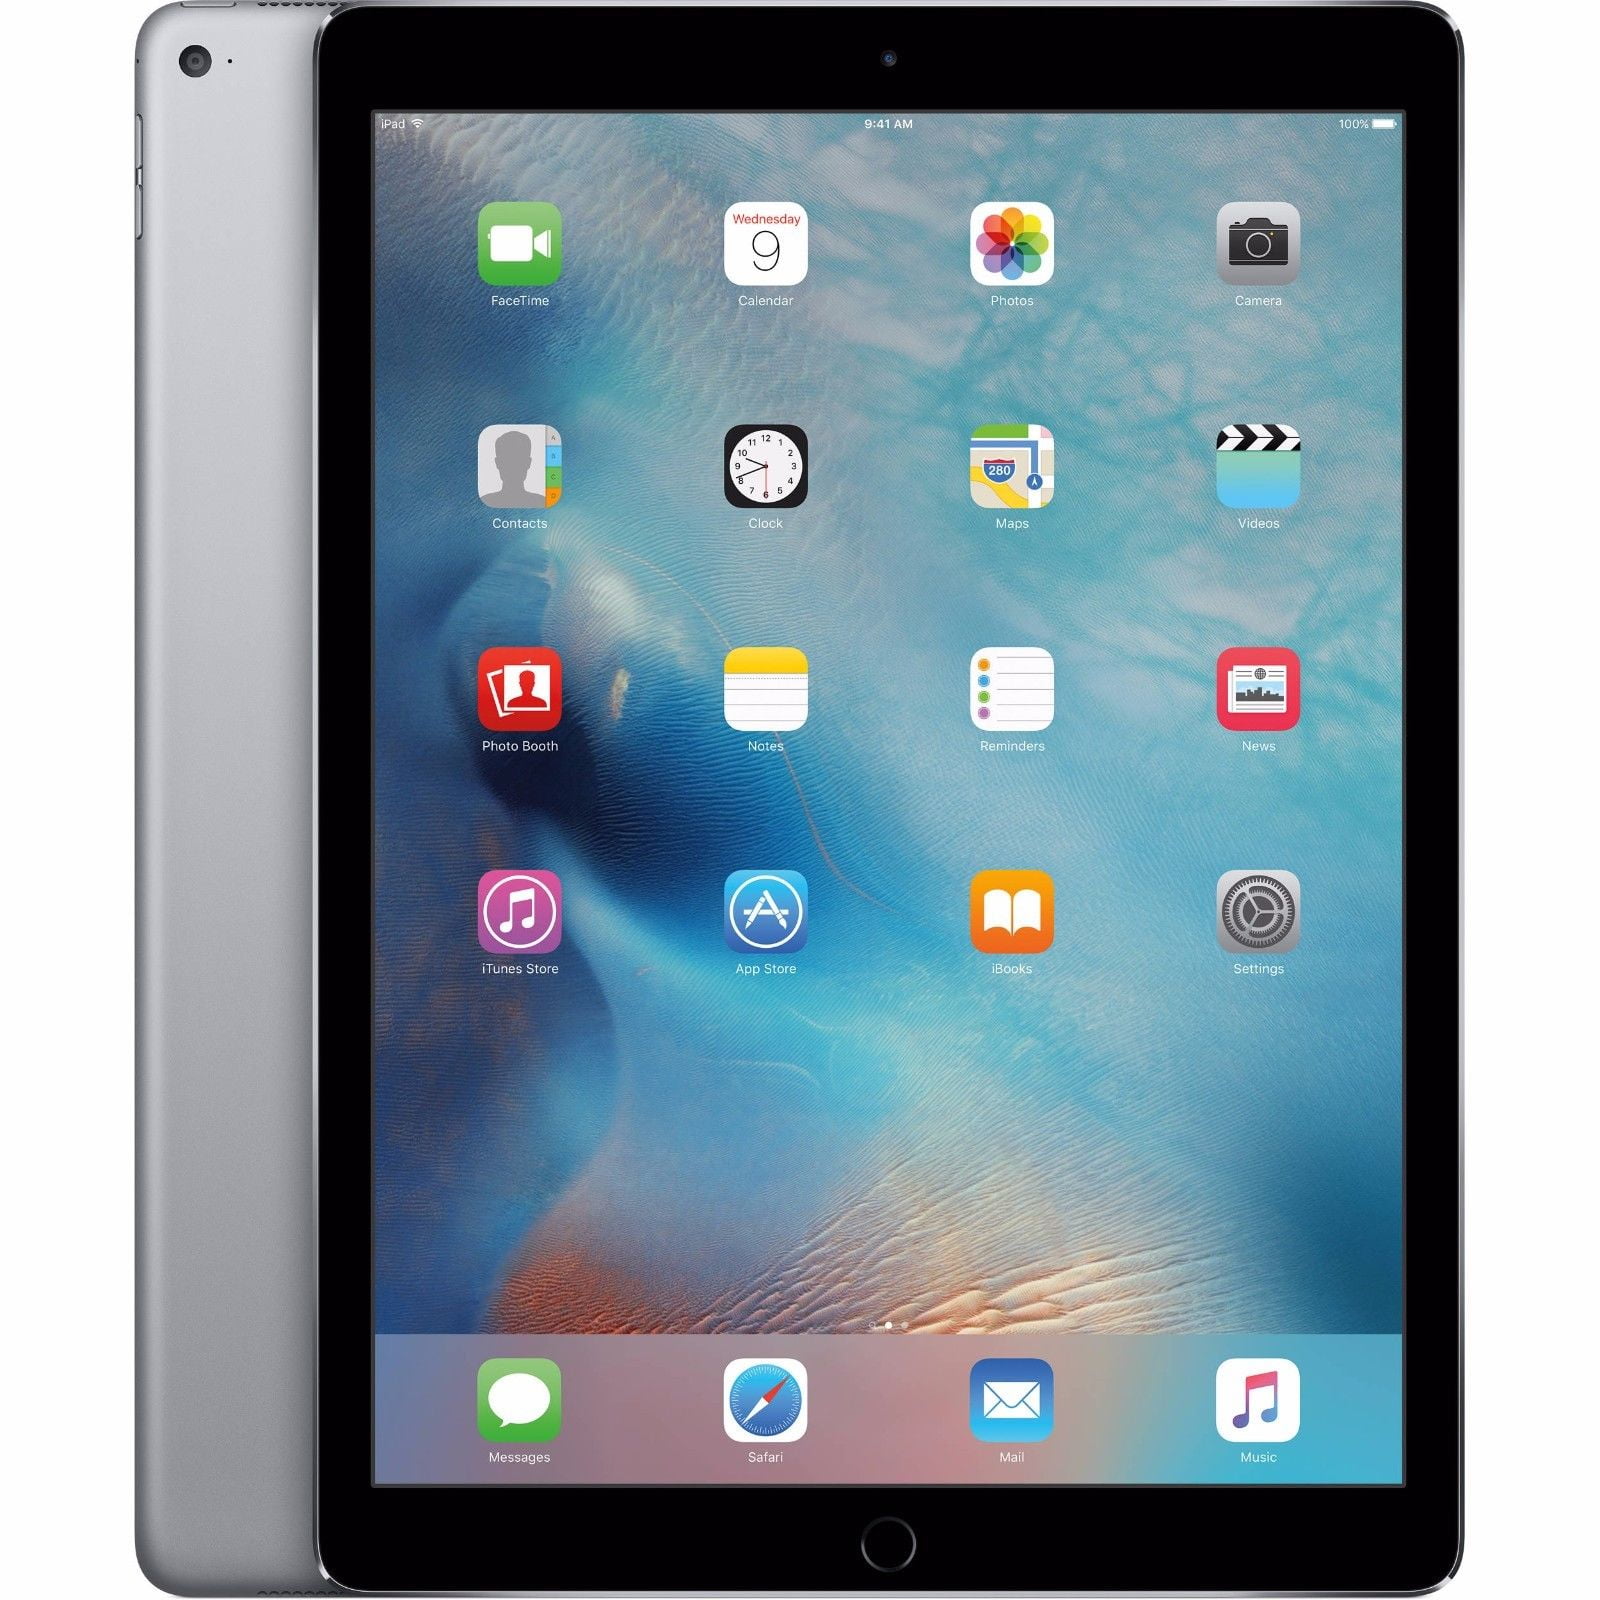 Restored Apple iPad 5th Gen 128GB Wi-Fi, 9.7in - Space Gray (Refurbished)